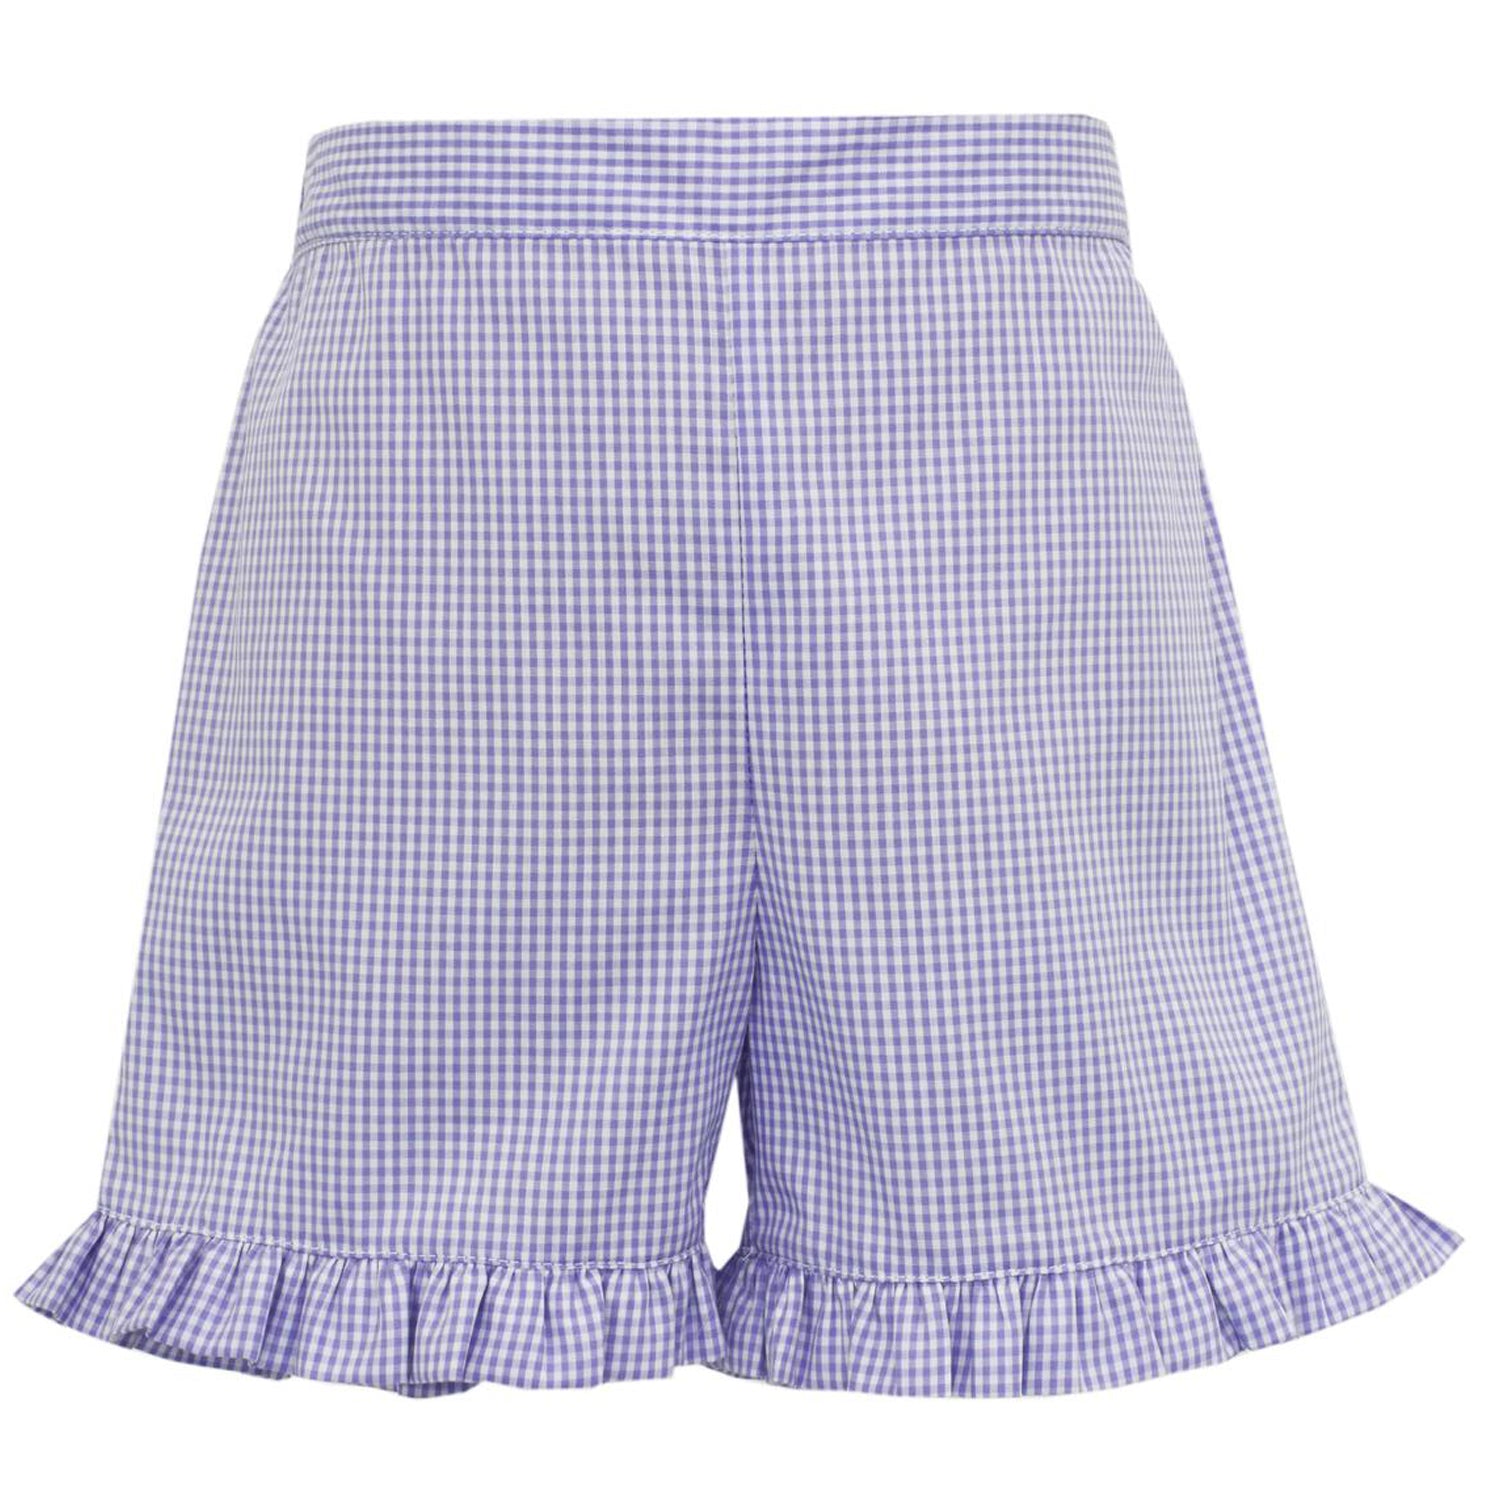 Lilac Gingham Girls Shorts